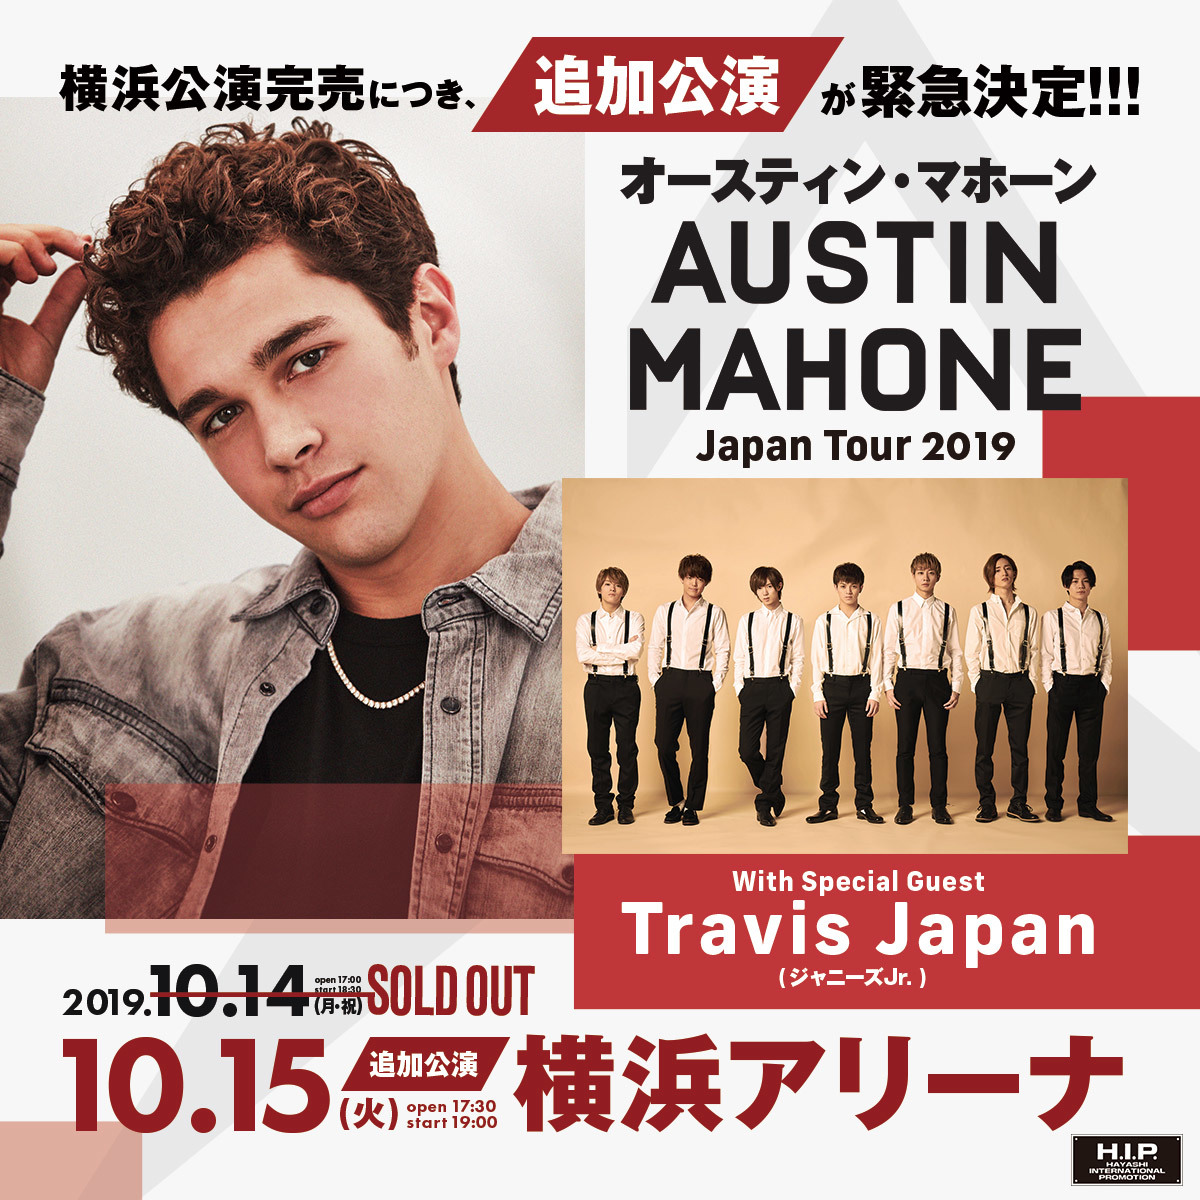 Austin Mahone Japan Tour 2019